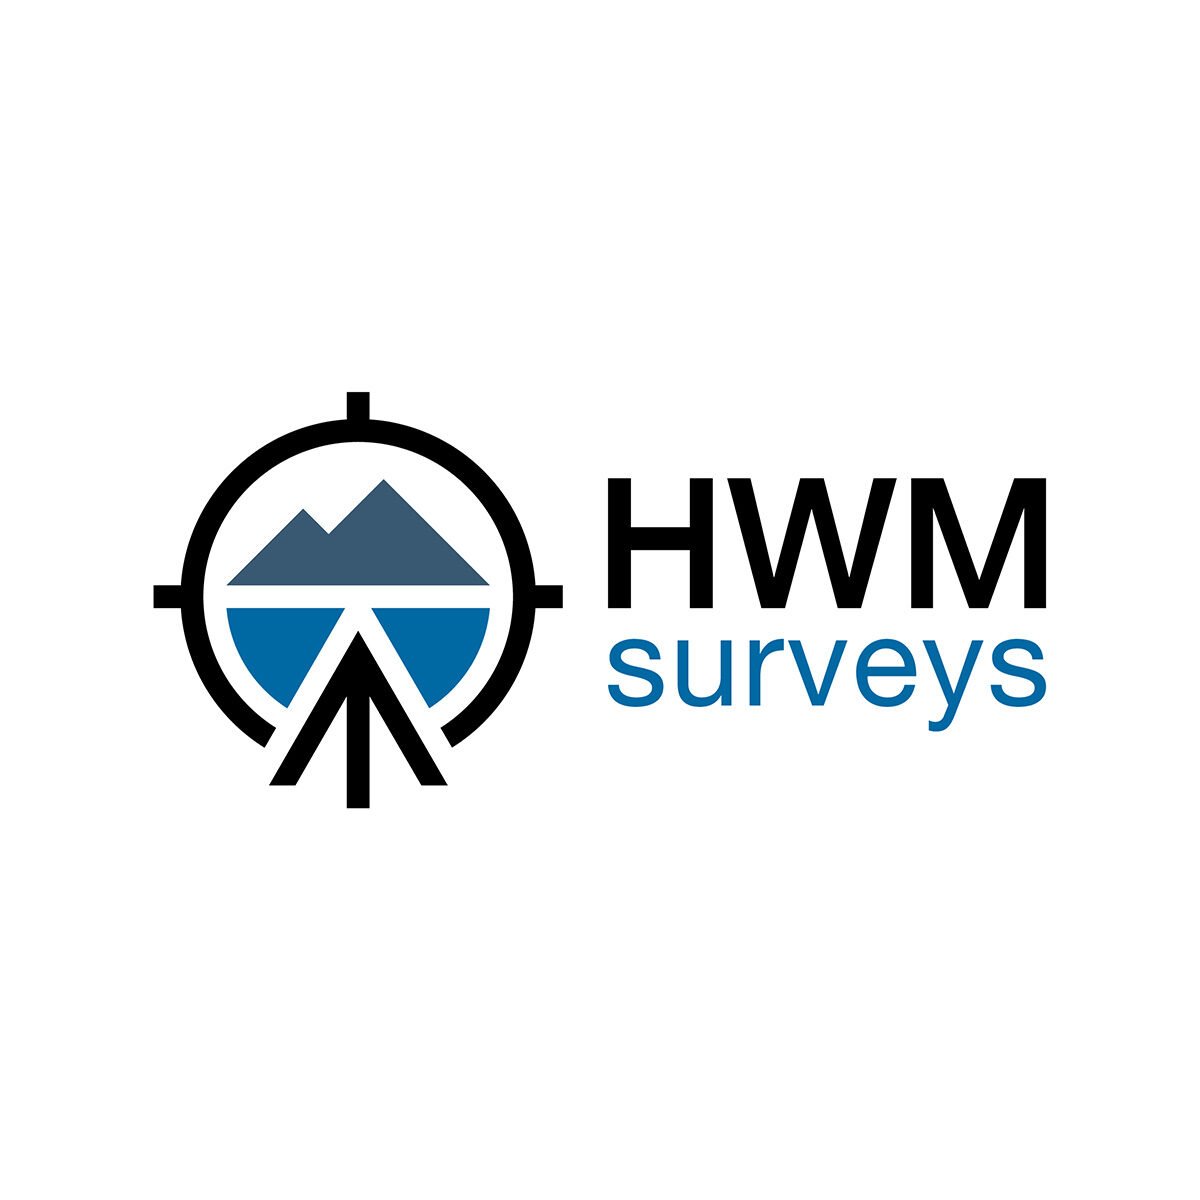 lindsay-mcghee-designs-hwm-surveys-logo-horz-simplep-1200